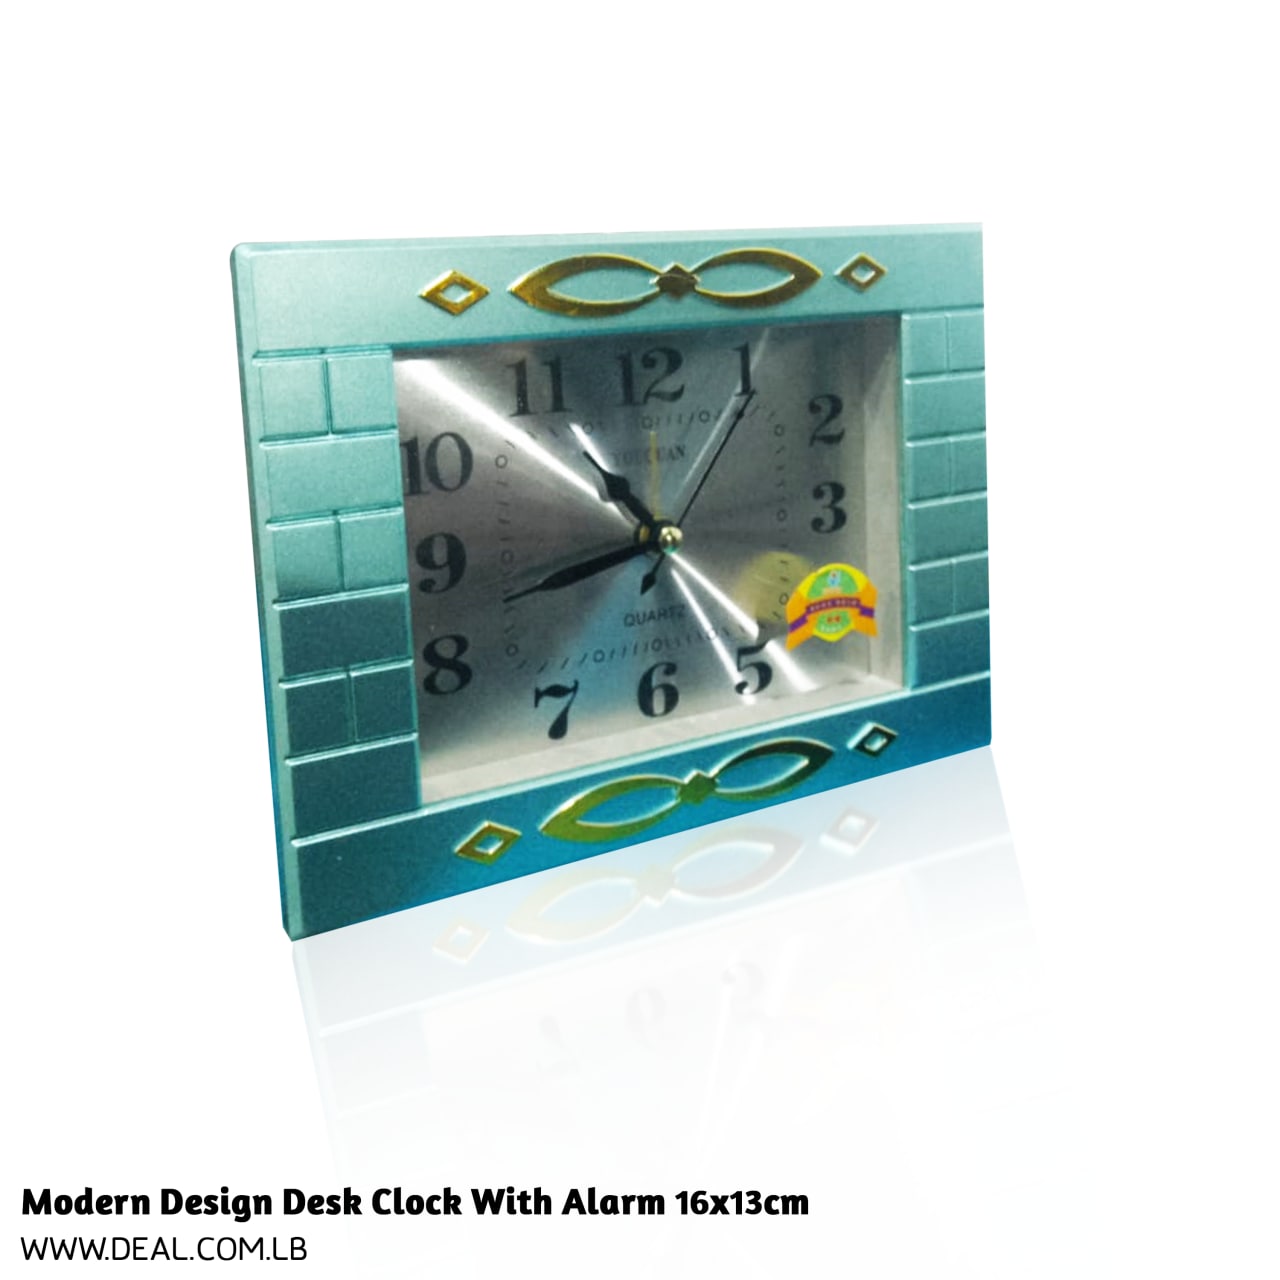 Modern Design Desk Clock With Alarm 16x13cm